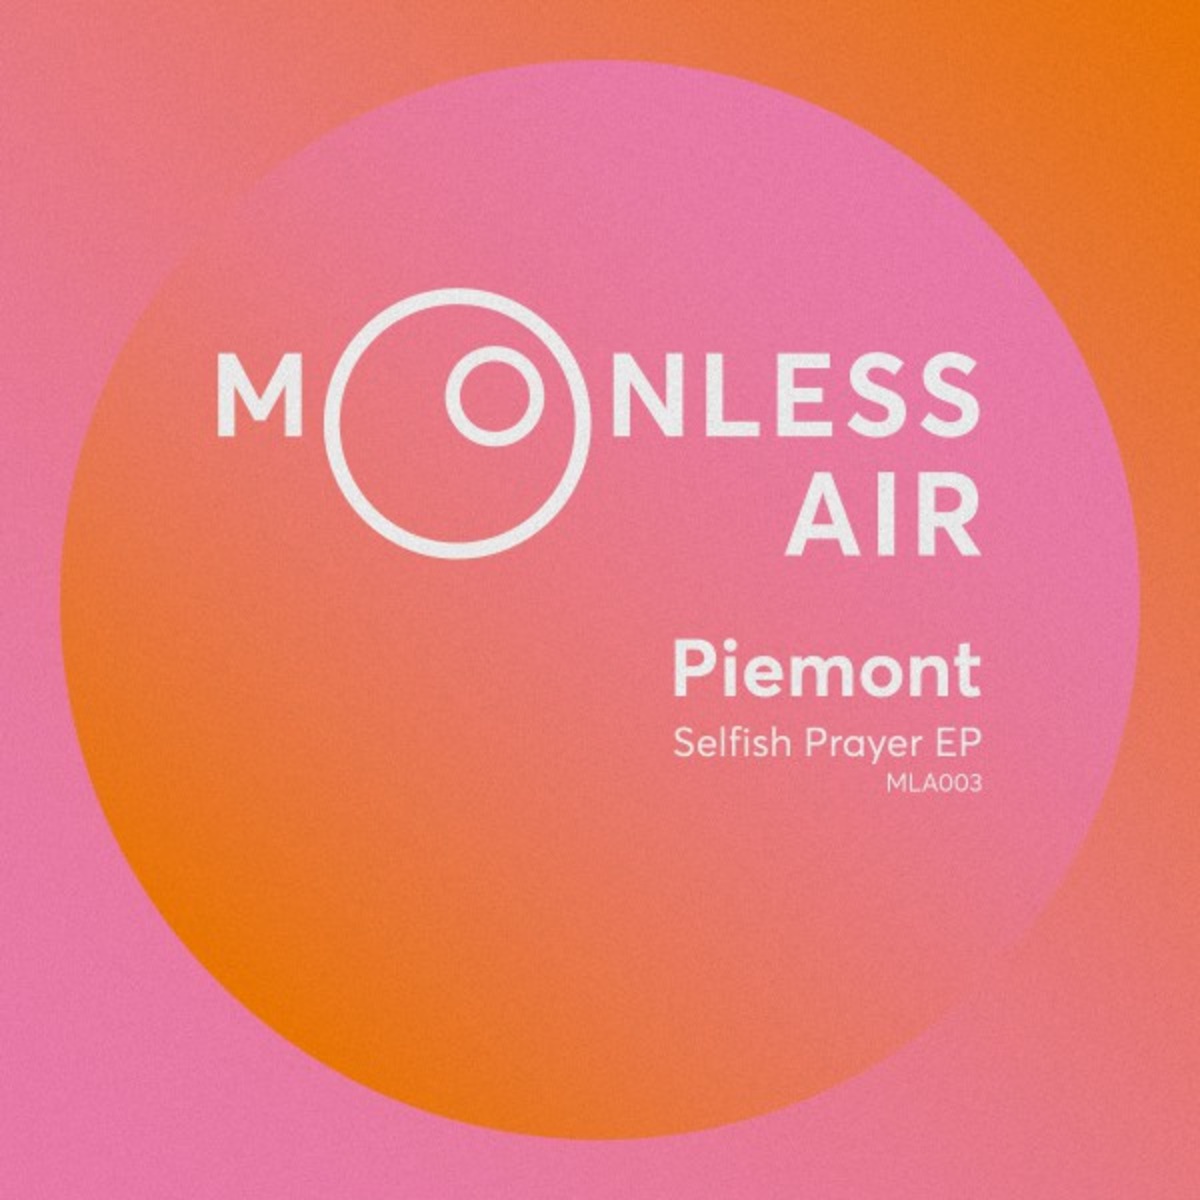 Piemont - Selfish Prayer EP / Moonless Air